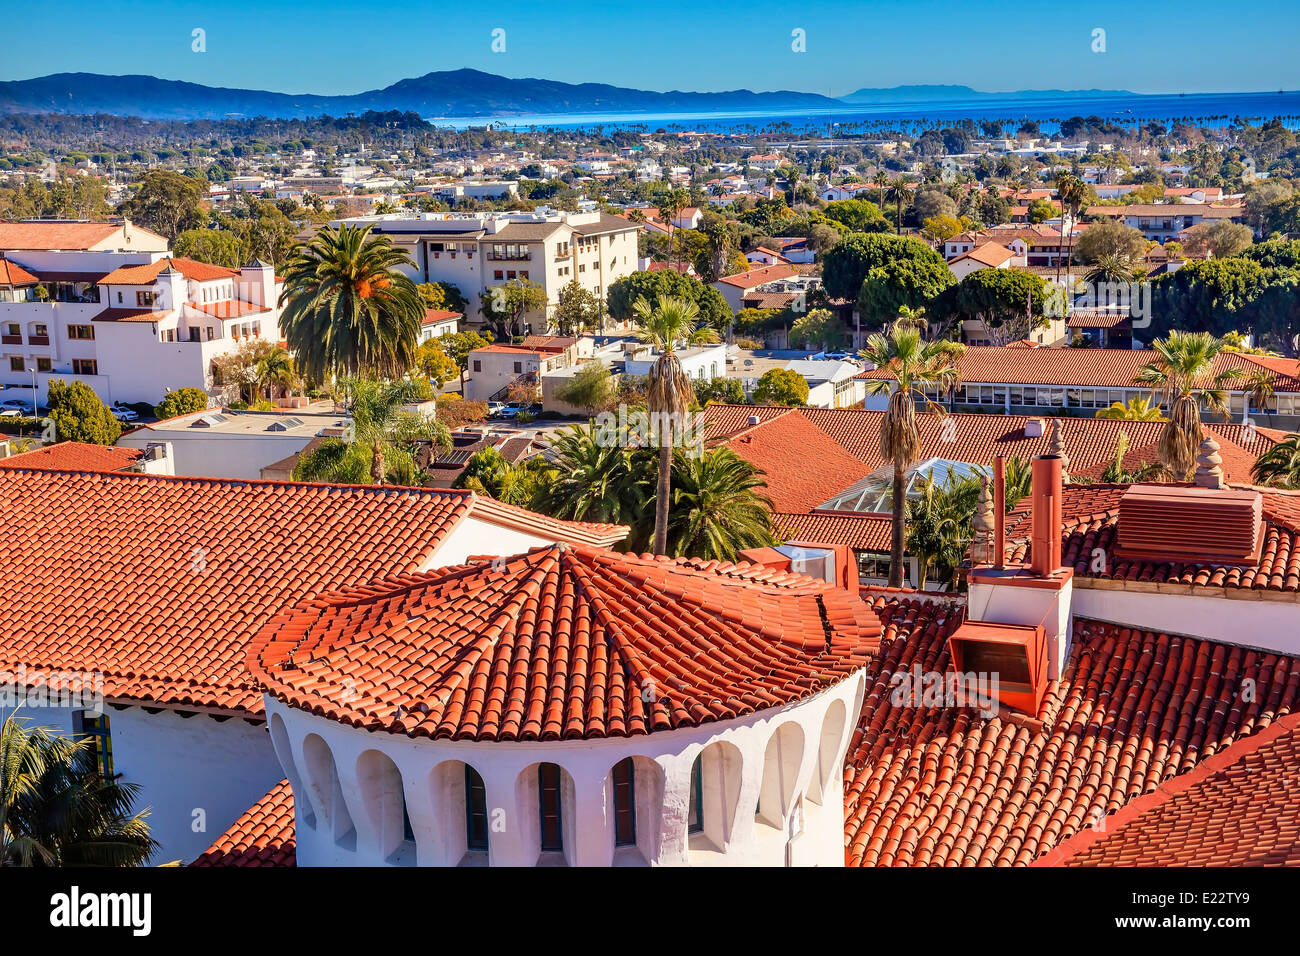 Court House Buildings Orange Roofs Pacific Ocean Santa Barbara California Stock Photo